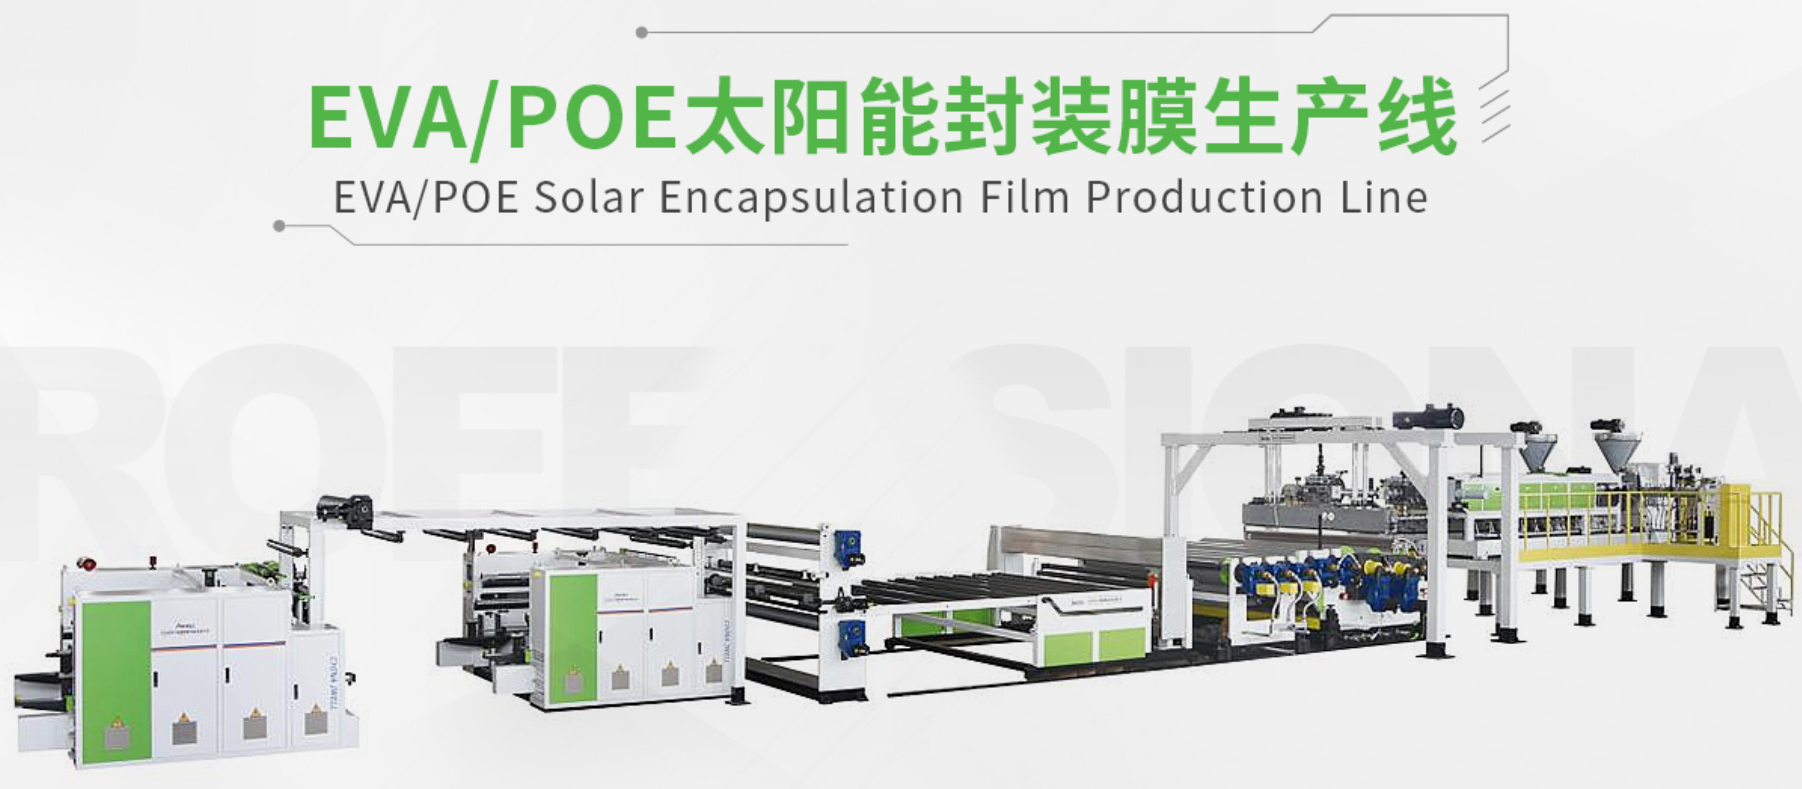 EVA/POE太阳能封装膜生产线